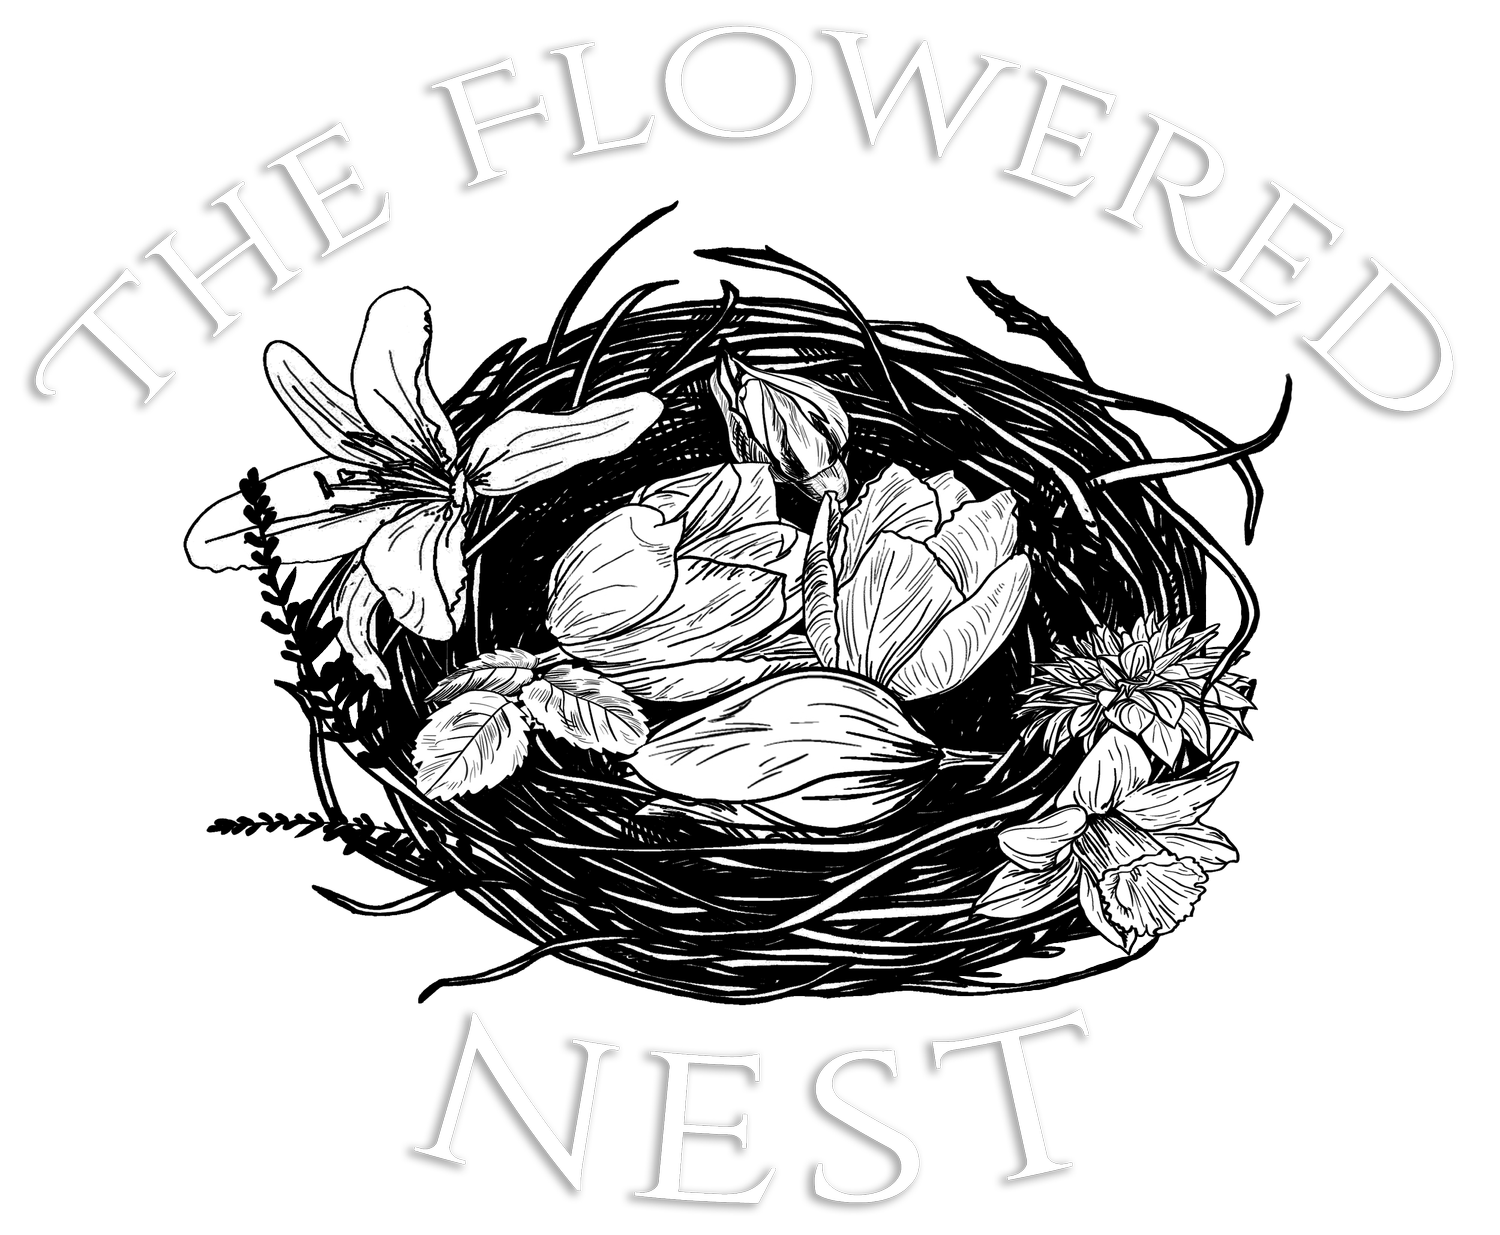 The Flowered Nest